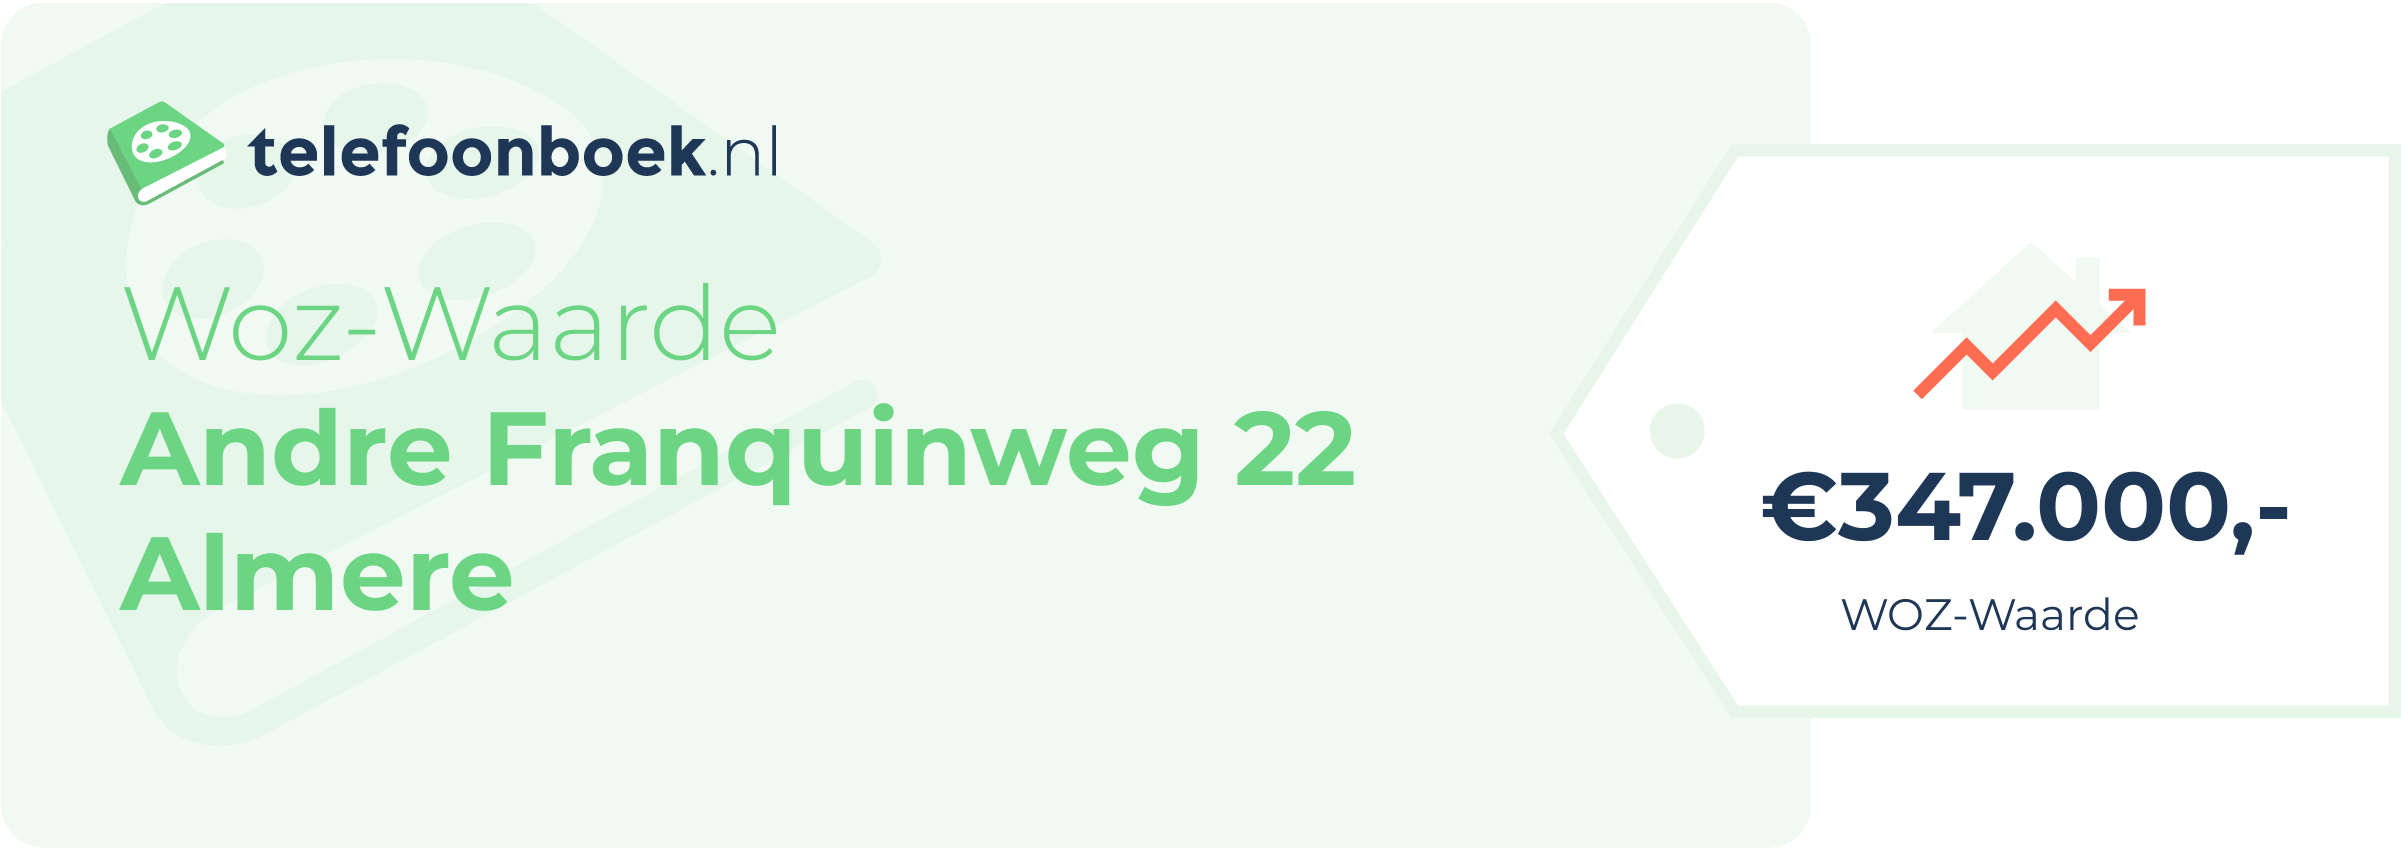 WOZ-waarde Andre Franquinweg 22 Almere